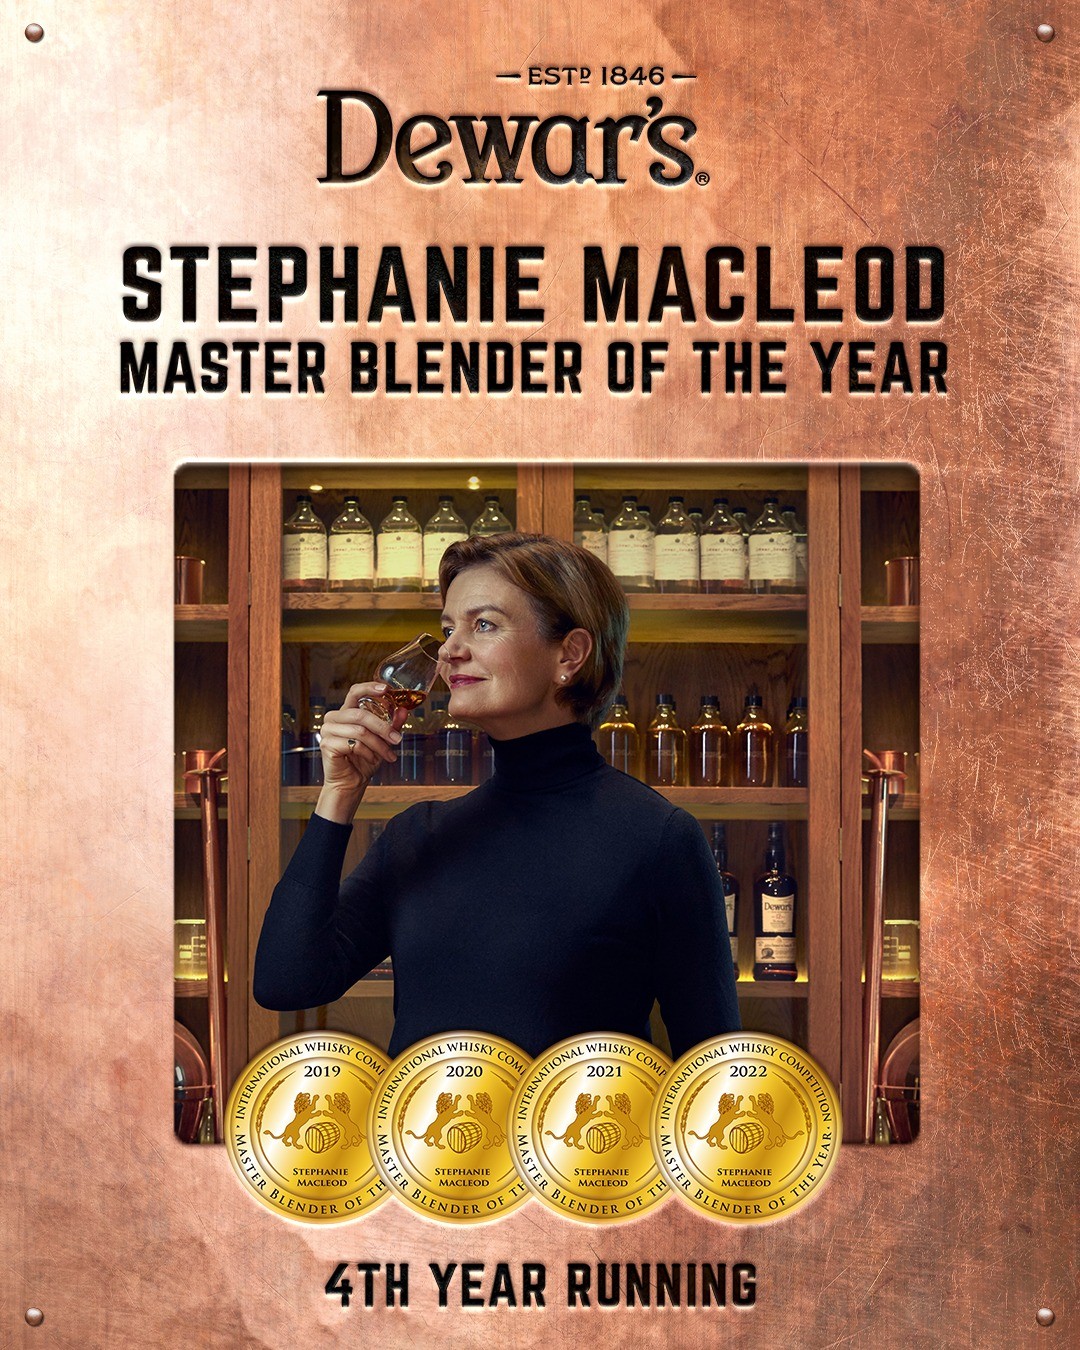 Congratulations to Dewar’s Master Blend Stephanie Macleod on this most historic honor.

#WhiskyCastSponsor ##dewars #scotch